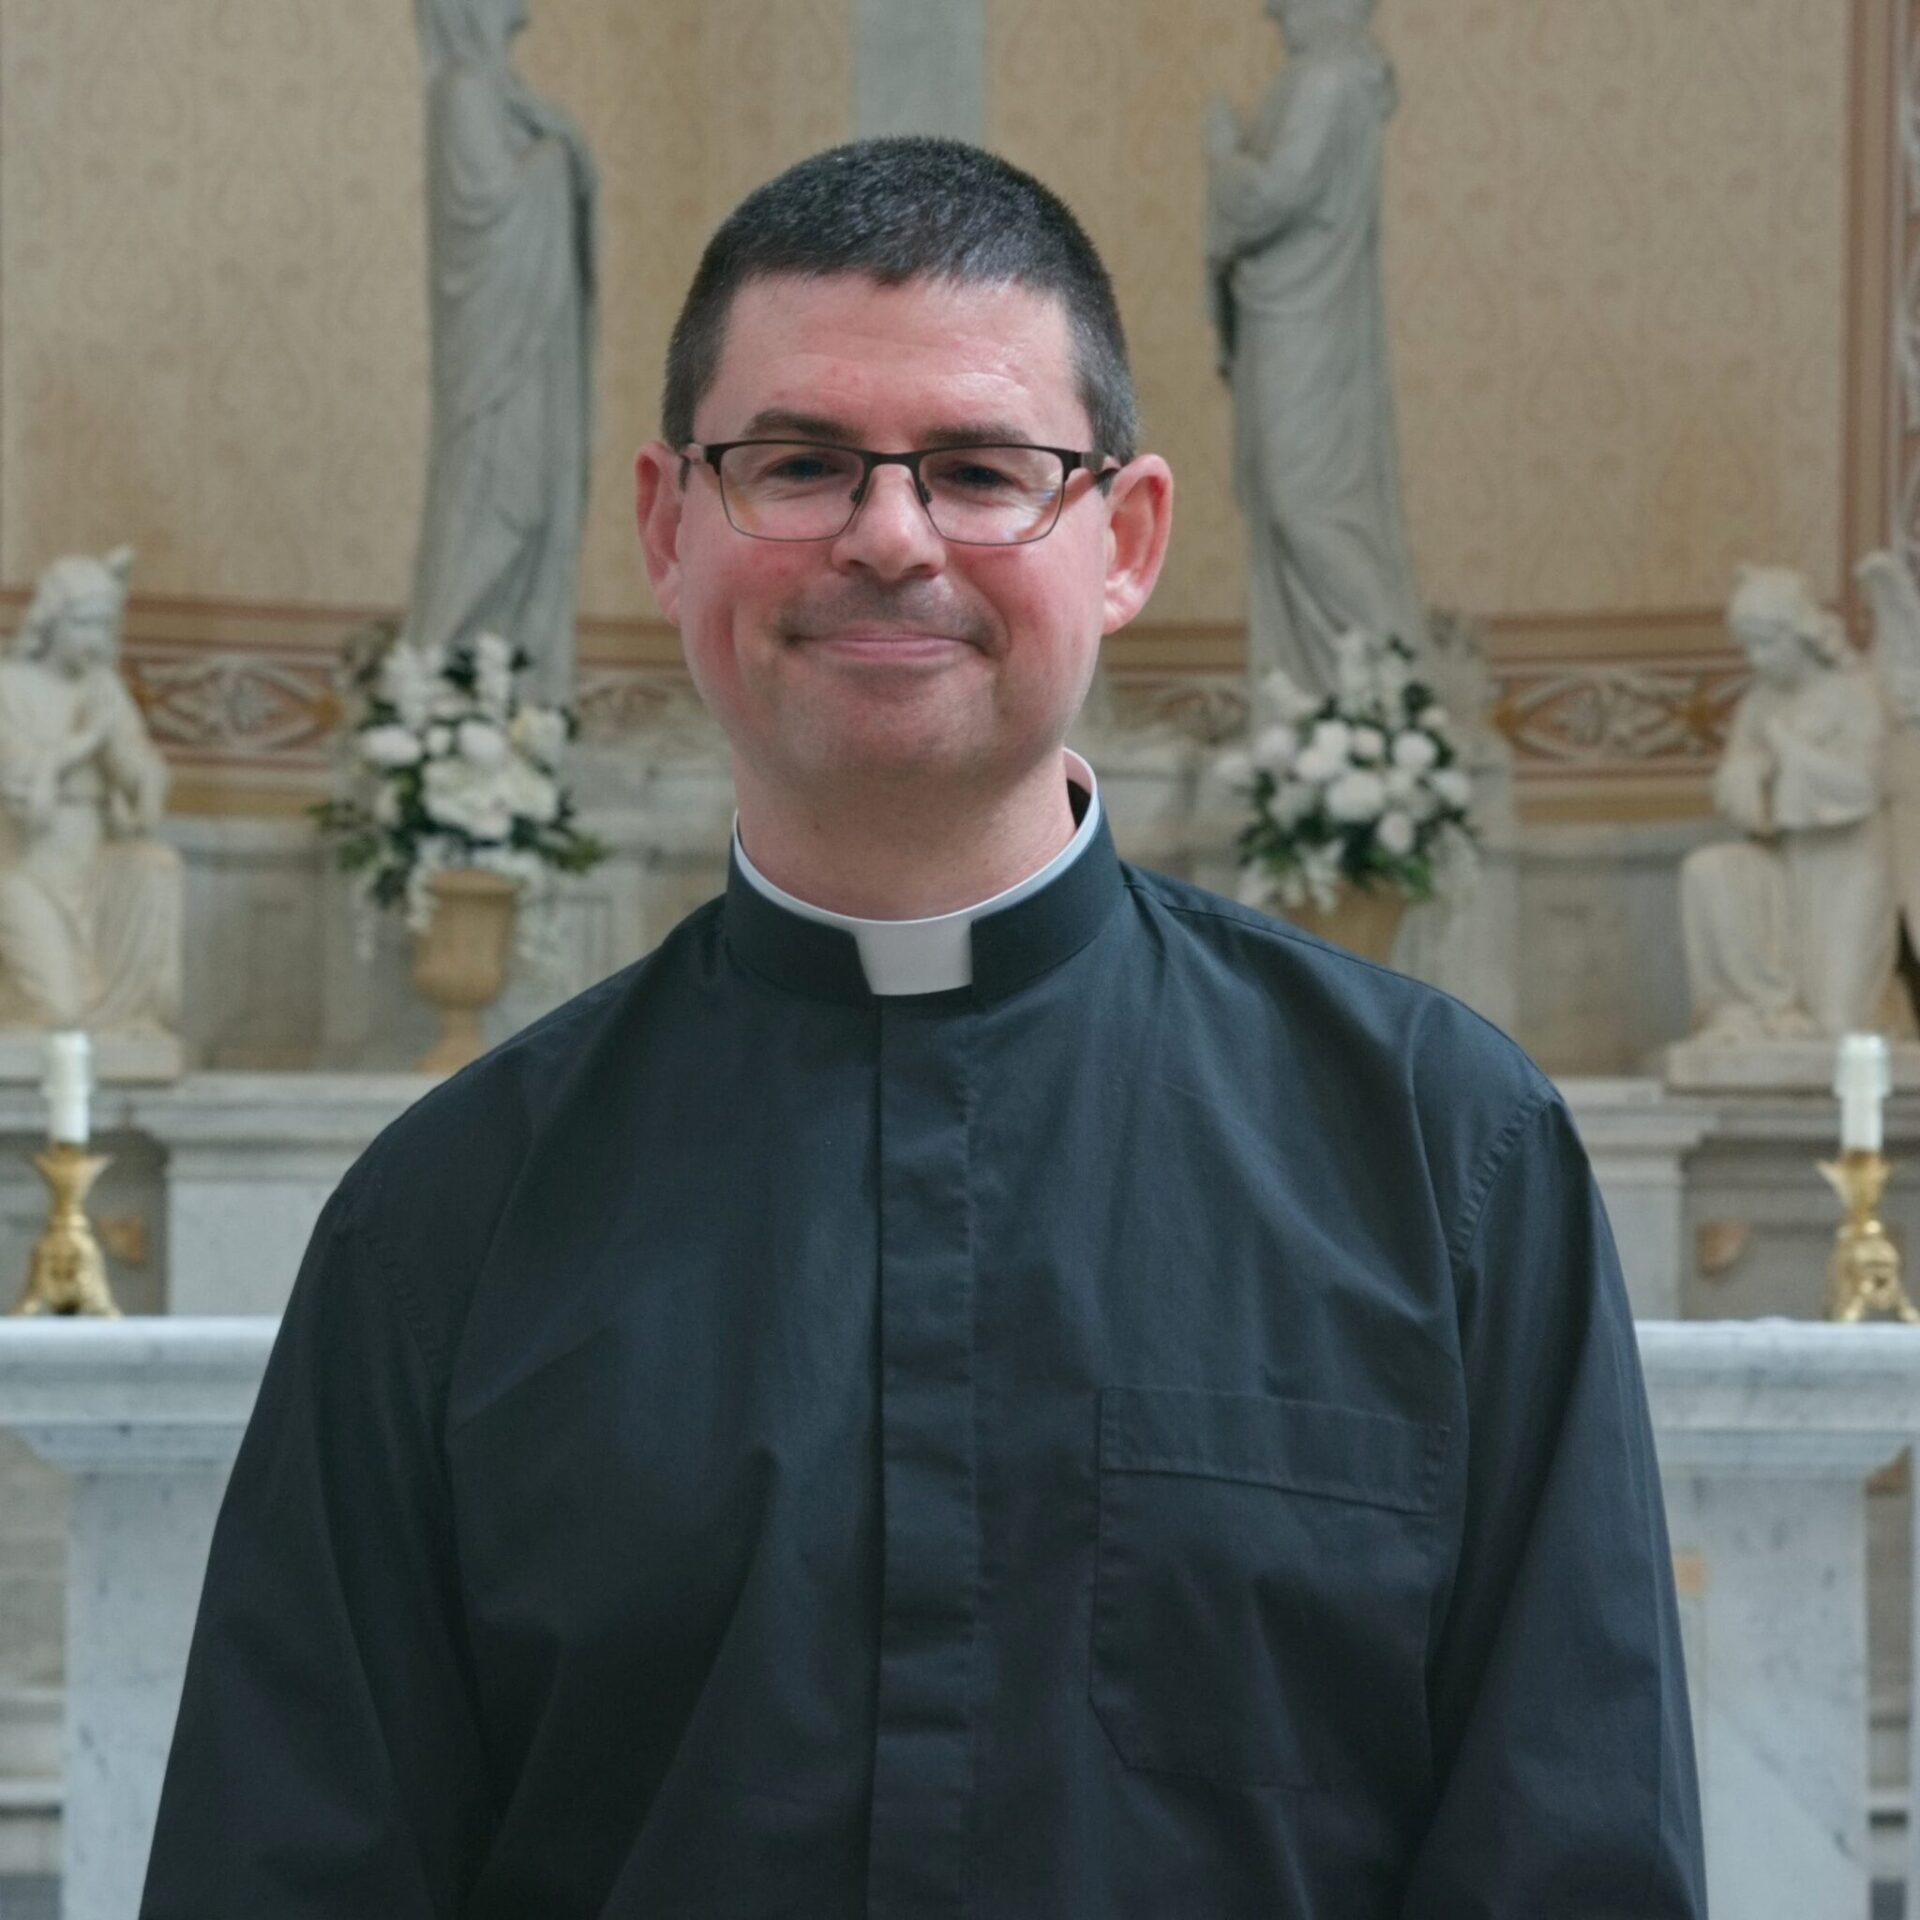 Fr. Dan Steiner, Associate Pastor